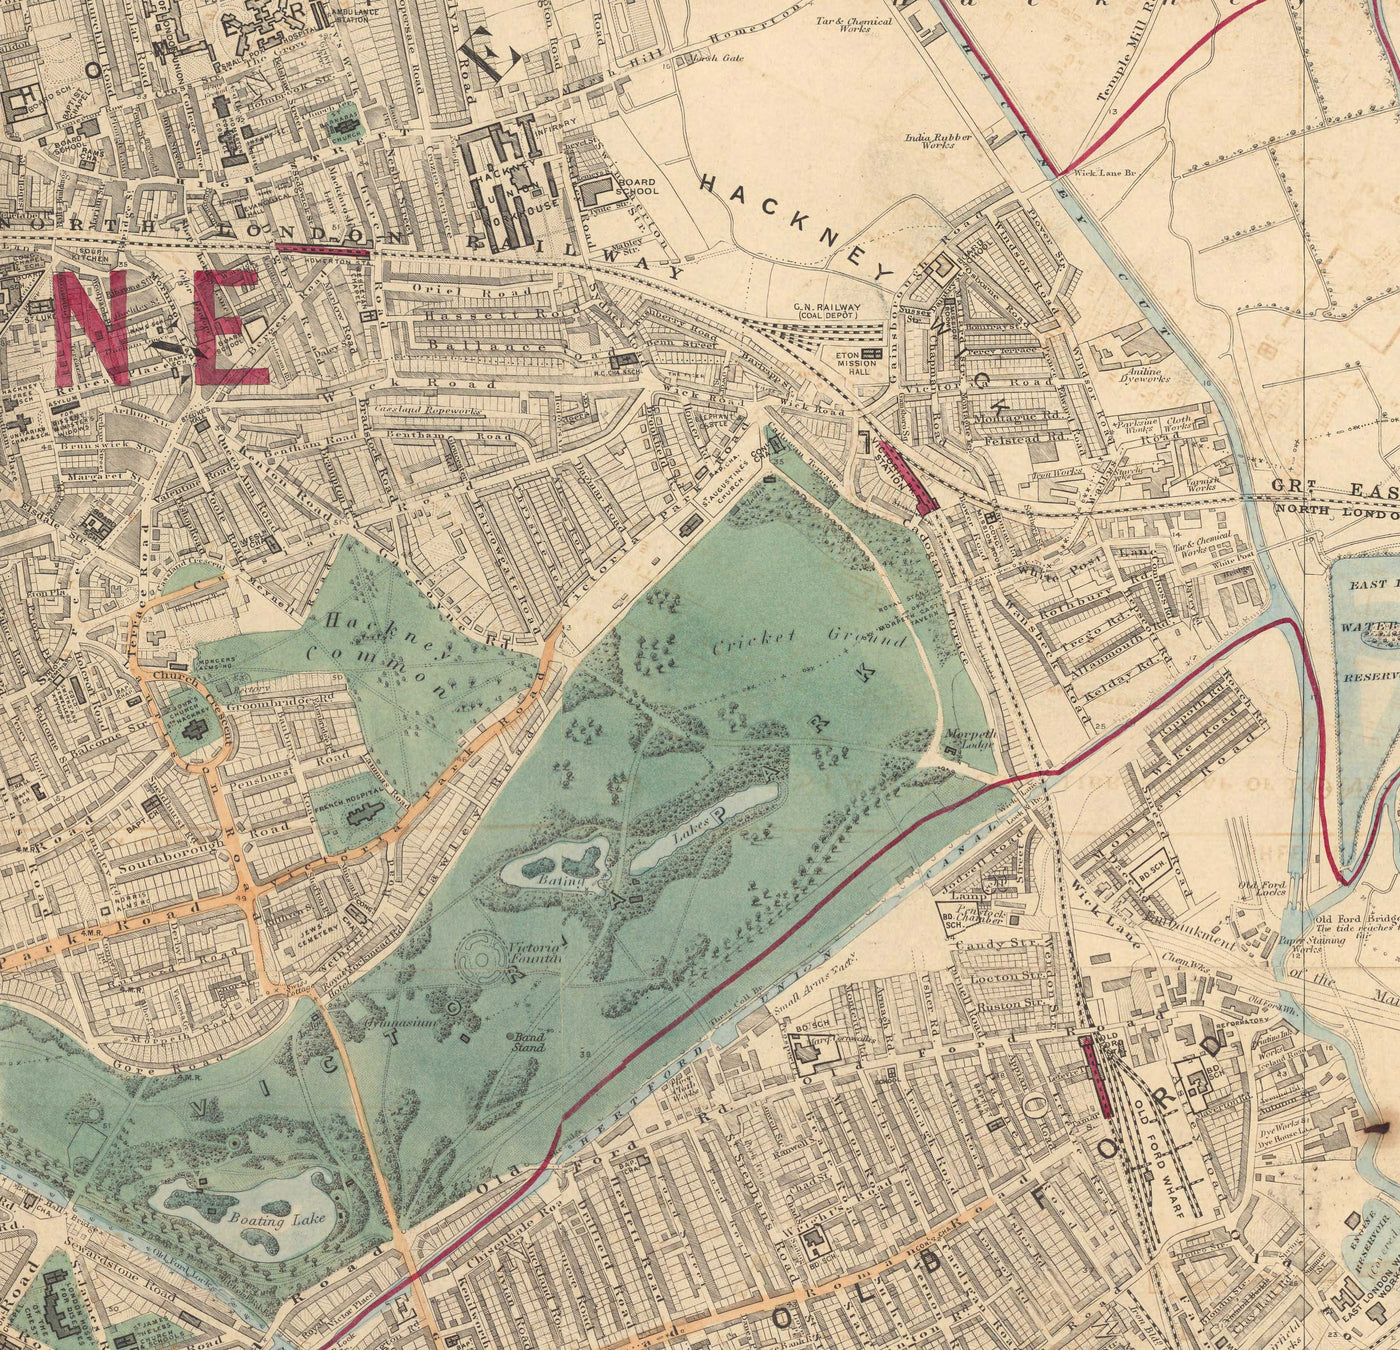 Alte Farbkarte von East London im Jahr 1891 - Victoria Park, Hackney, Bow, Stratford, Tower Hamlets - E9, E20, E3, E15